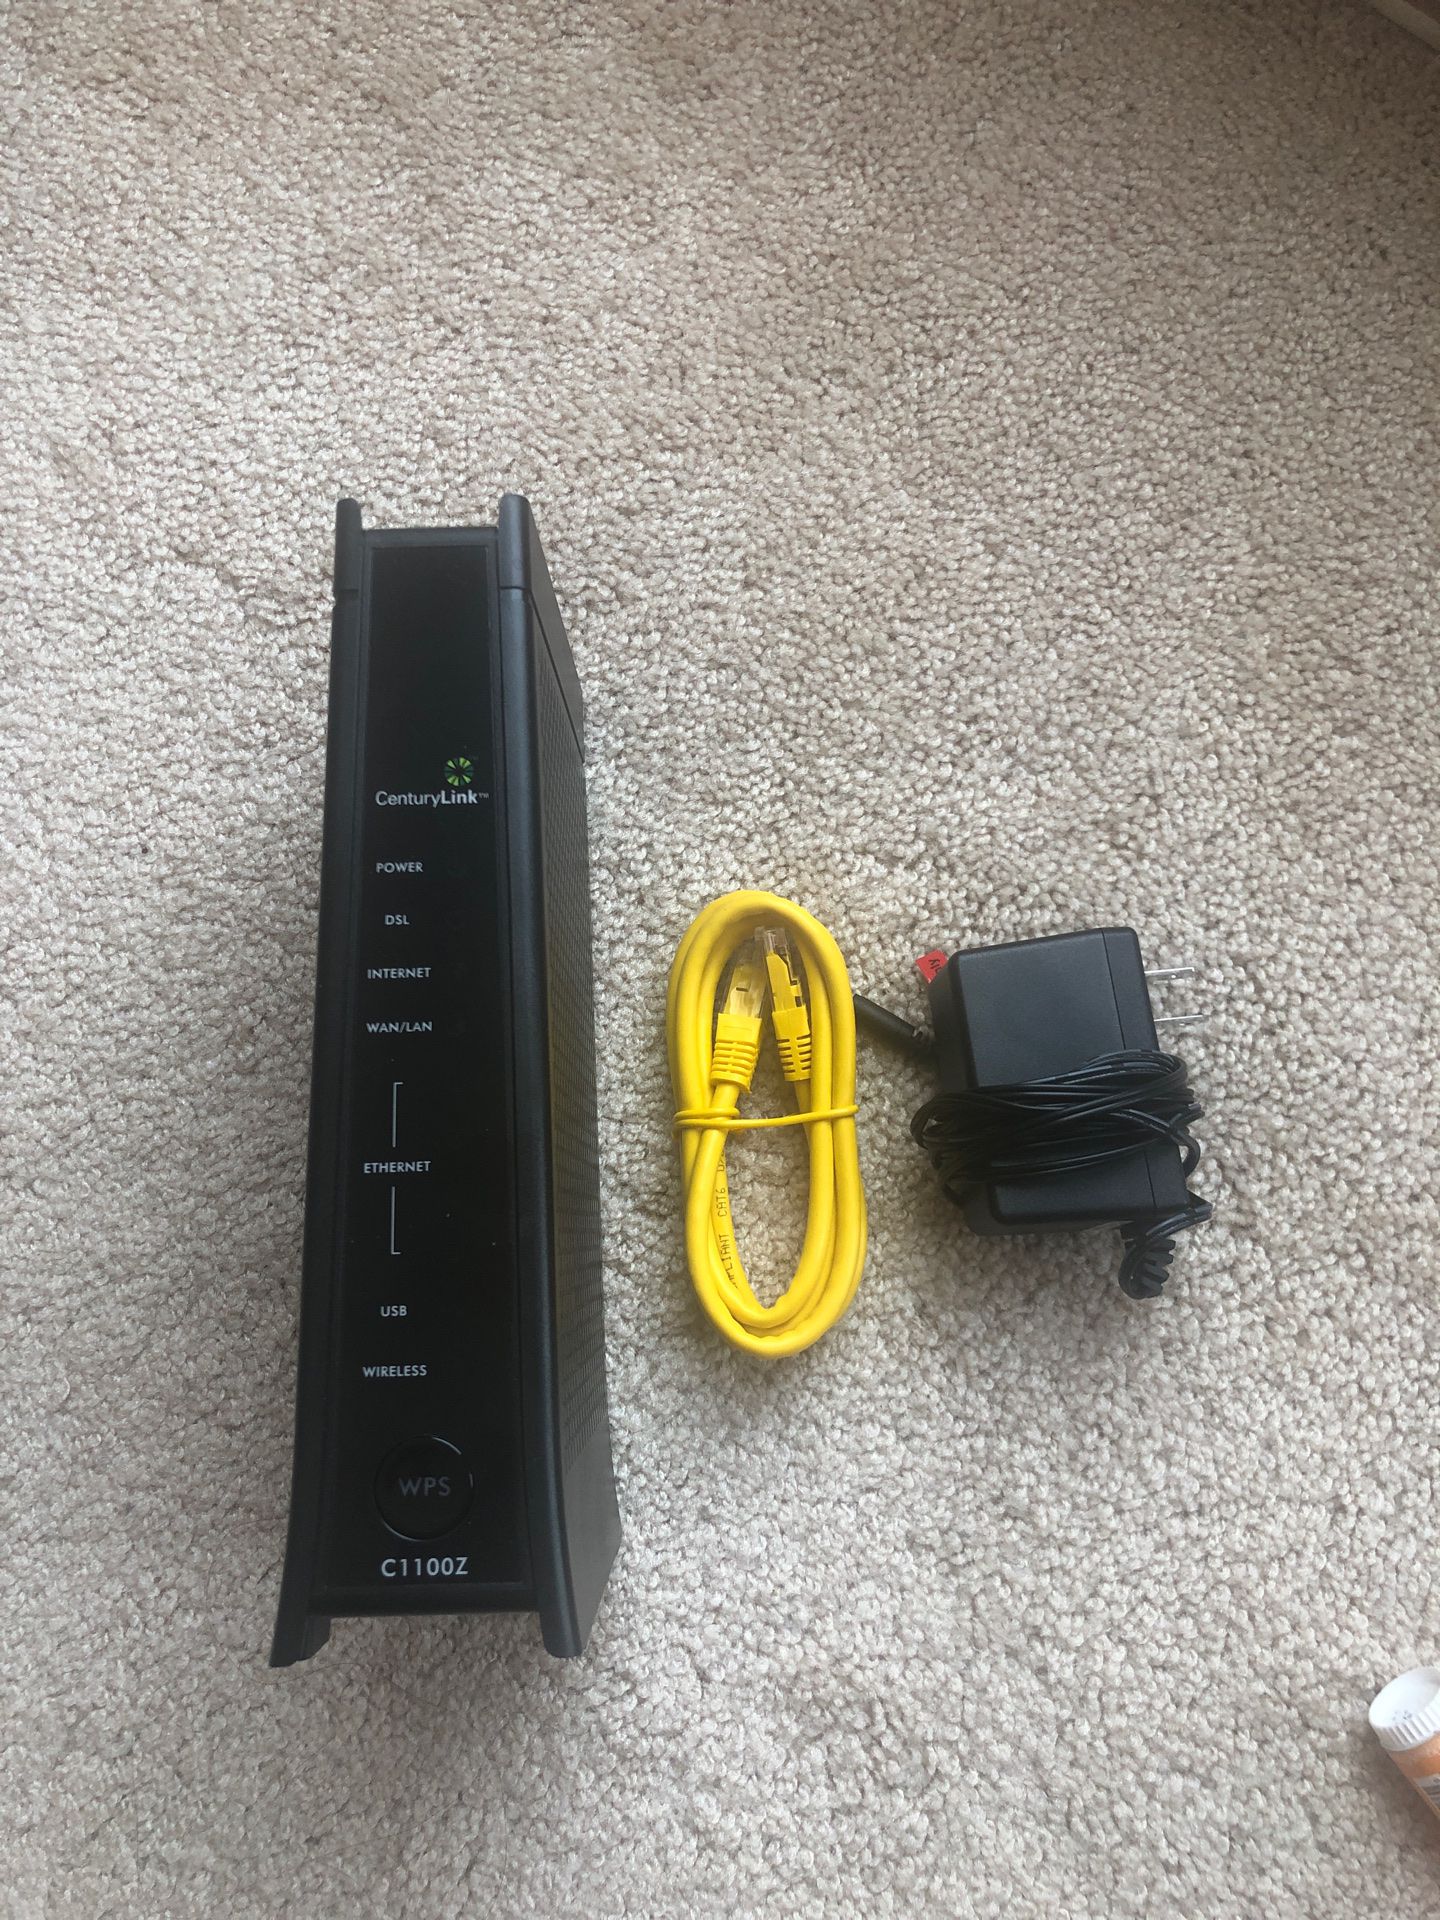 Centurylink wi-fi modem router ZyXEL C1100Z century link